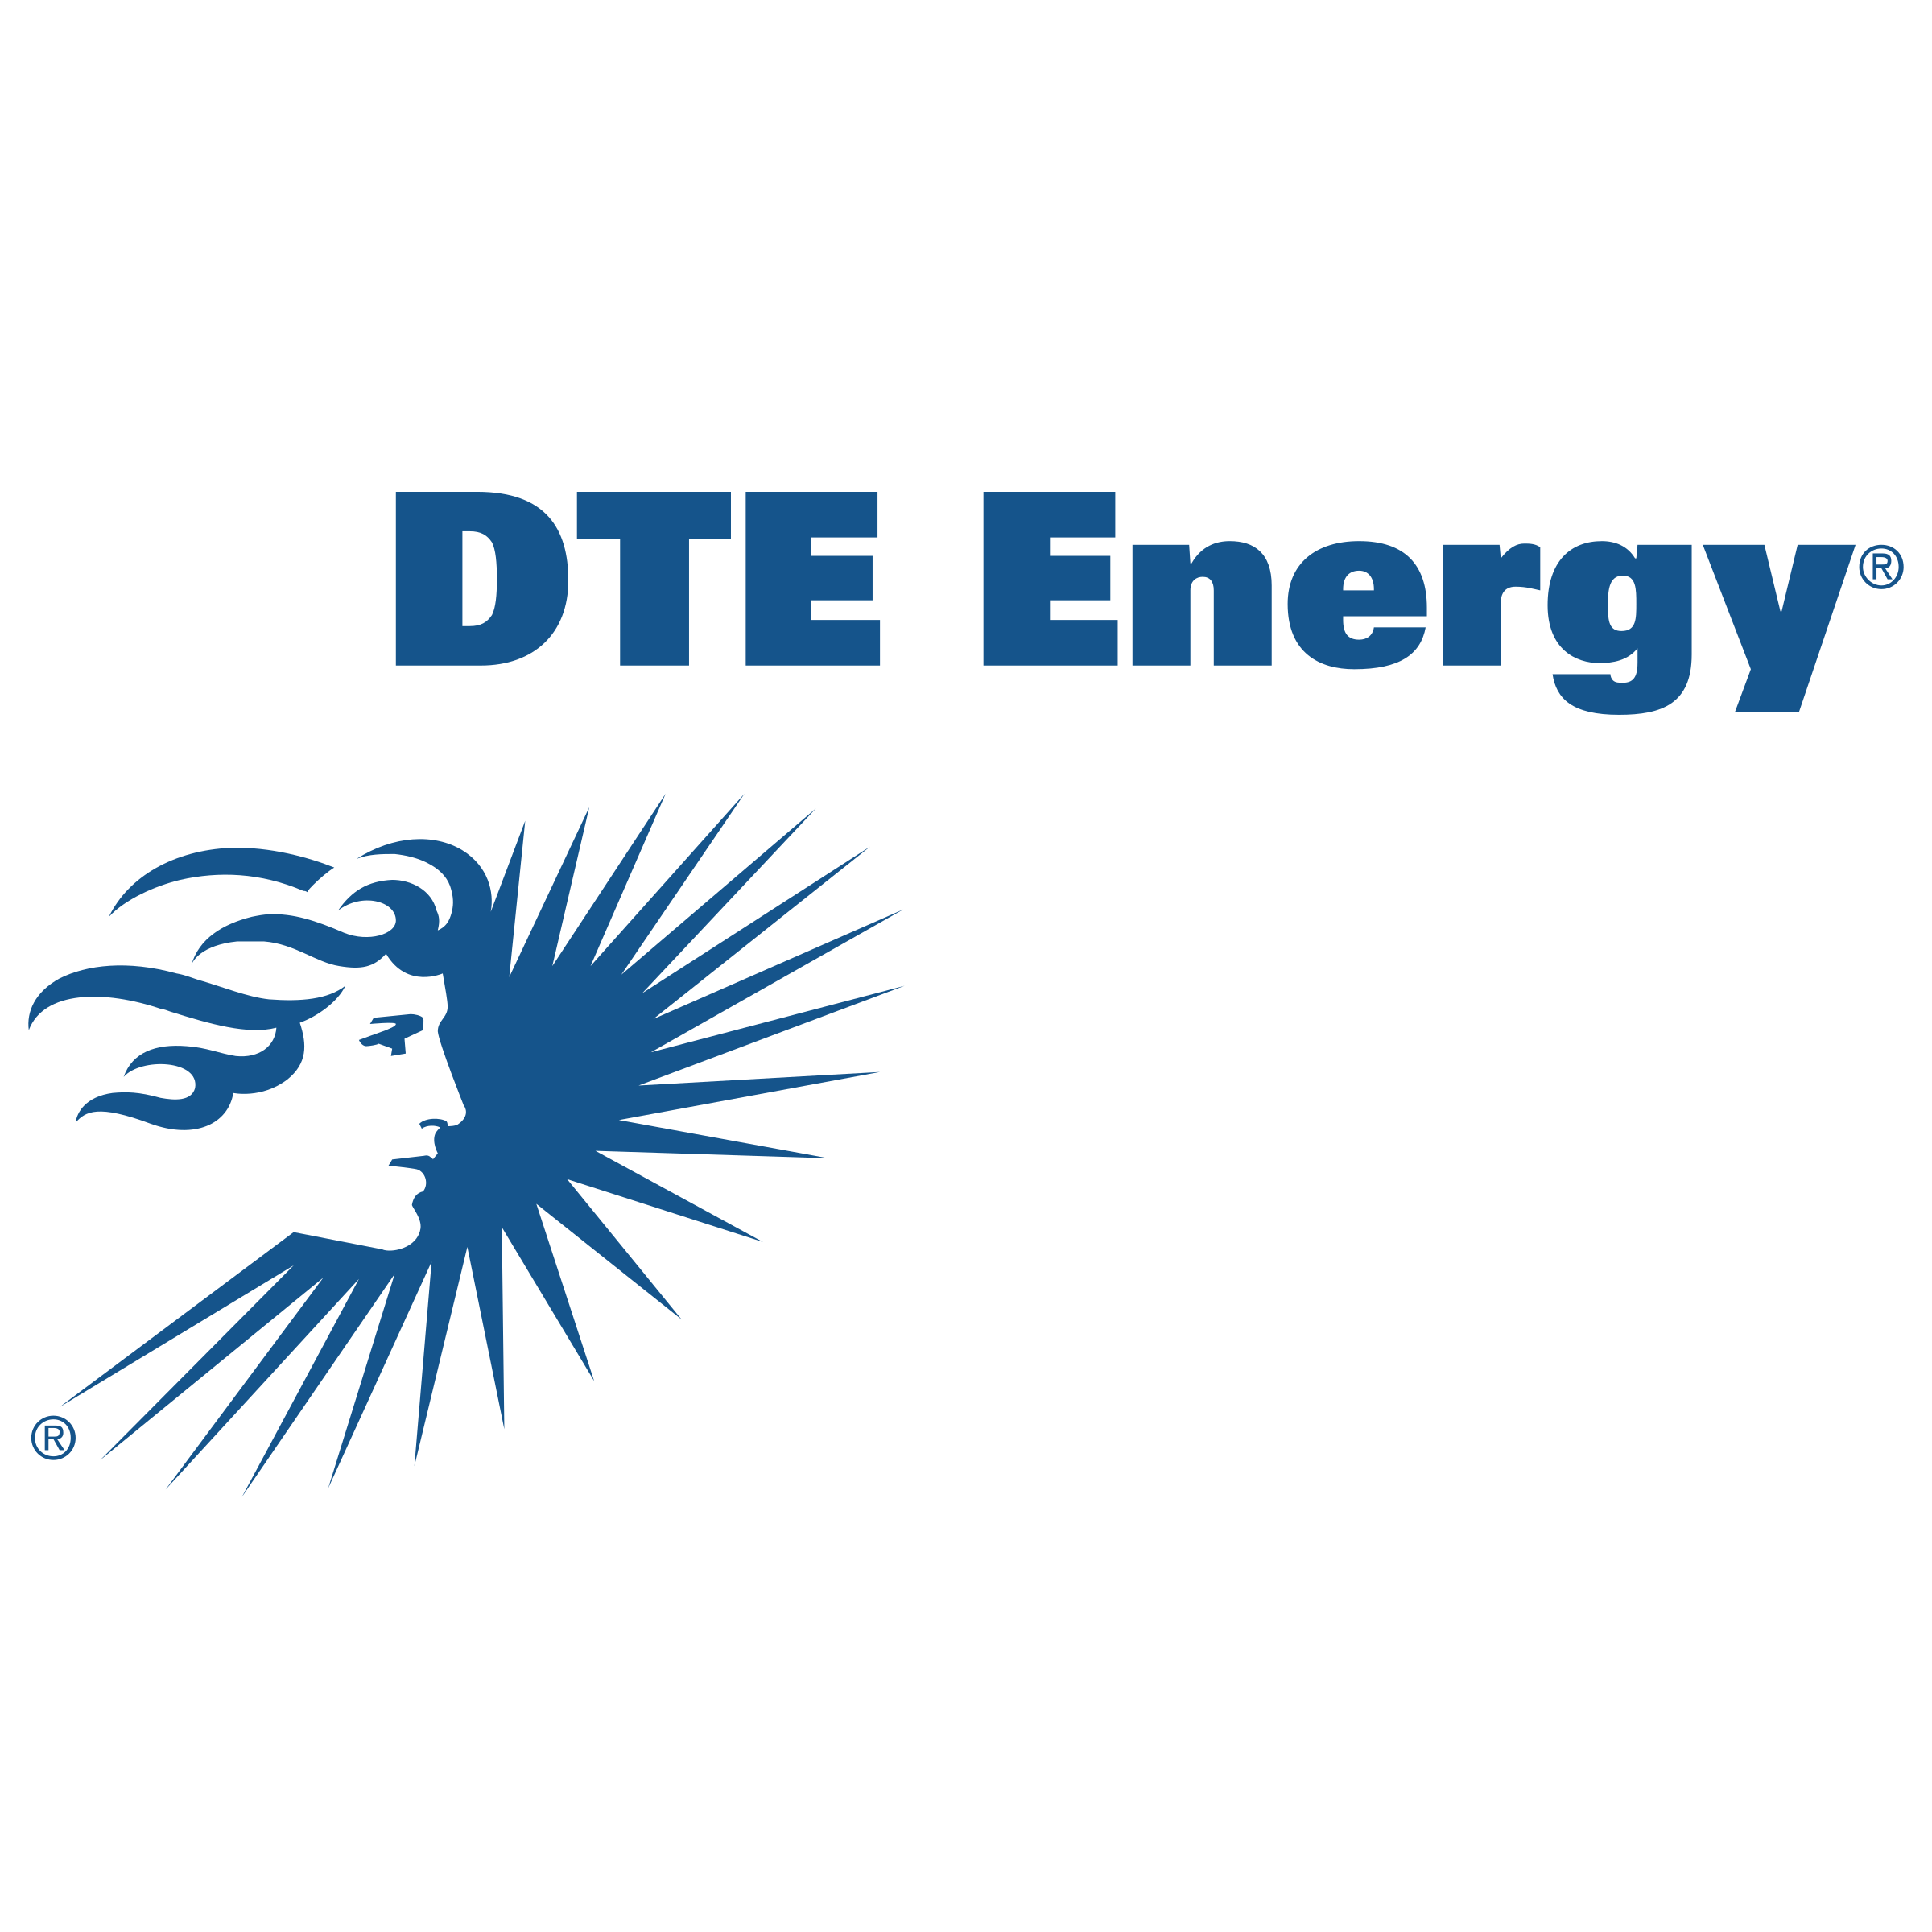 dte-energy-logo-png-transparent